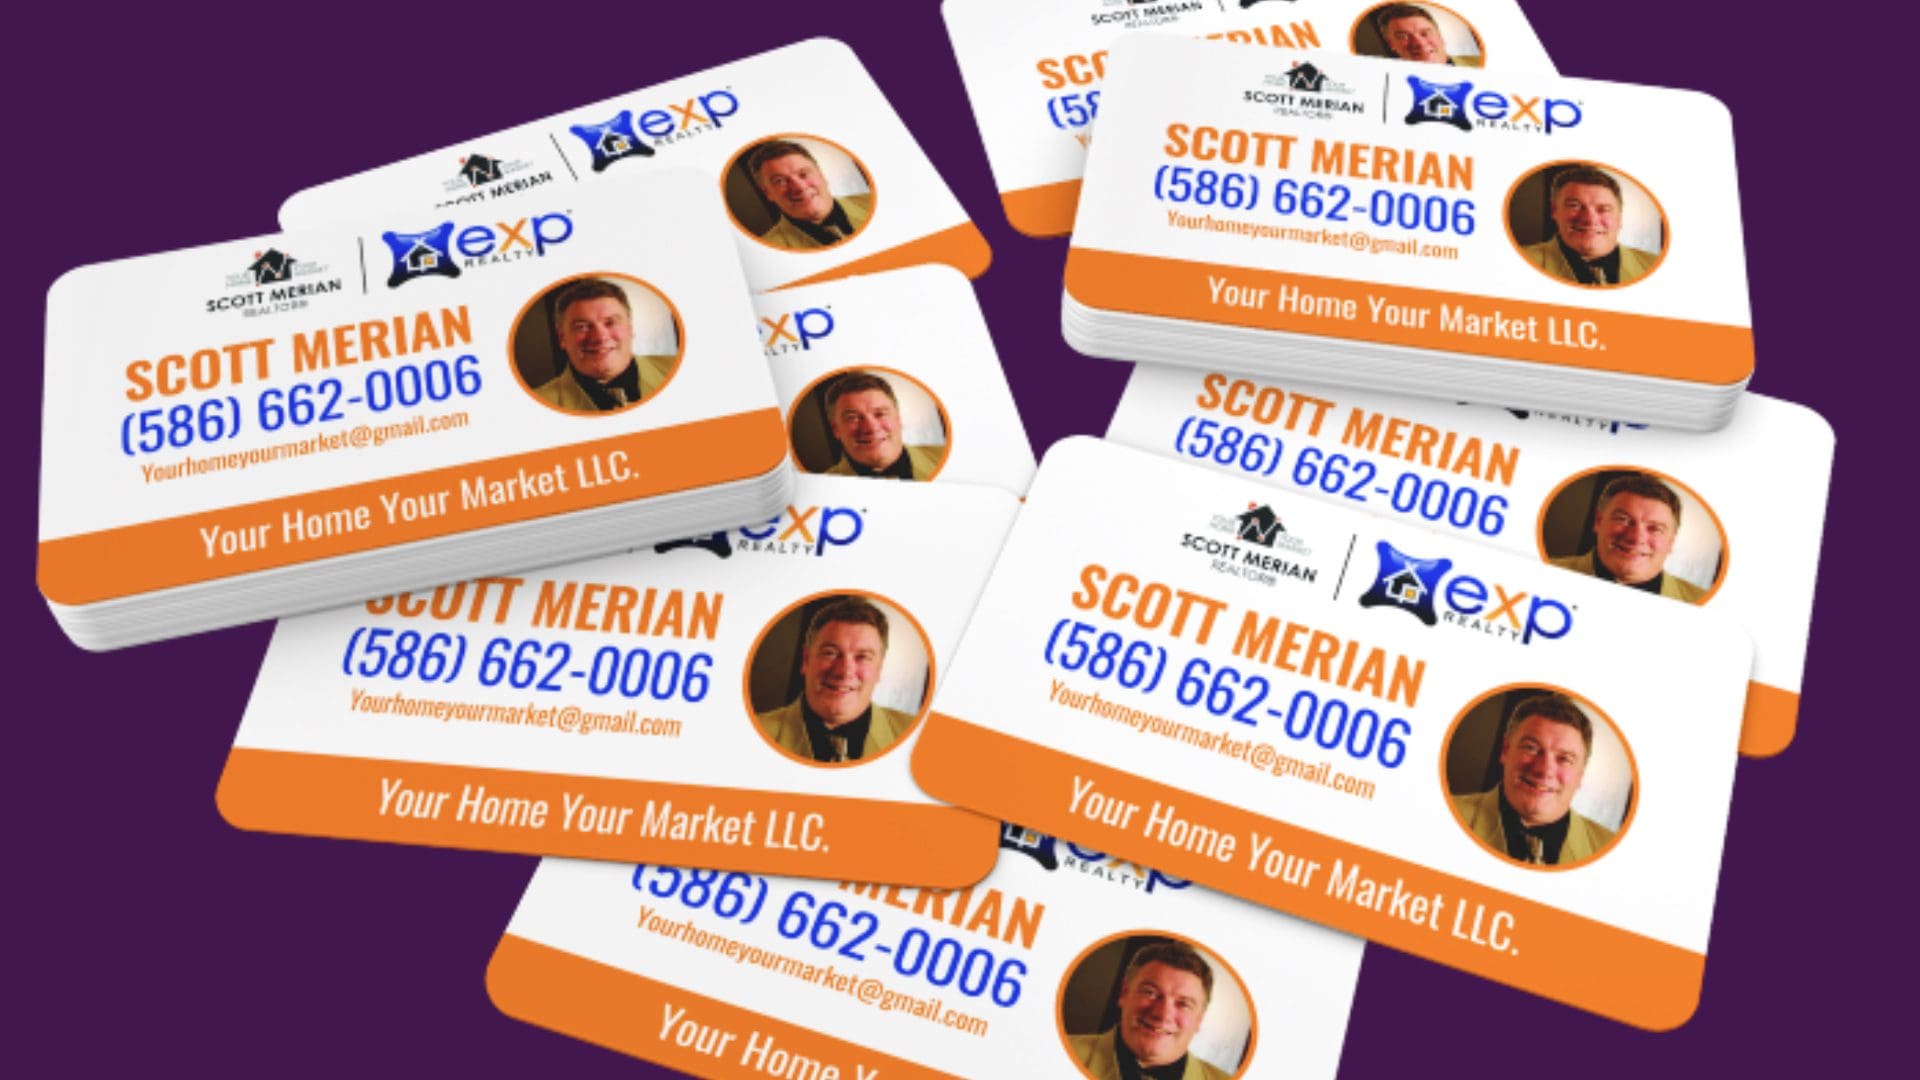 Your Home Your Market LLC - Scott Merian's Cards (3)